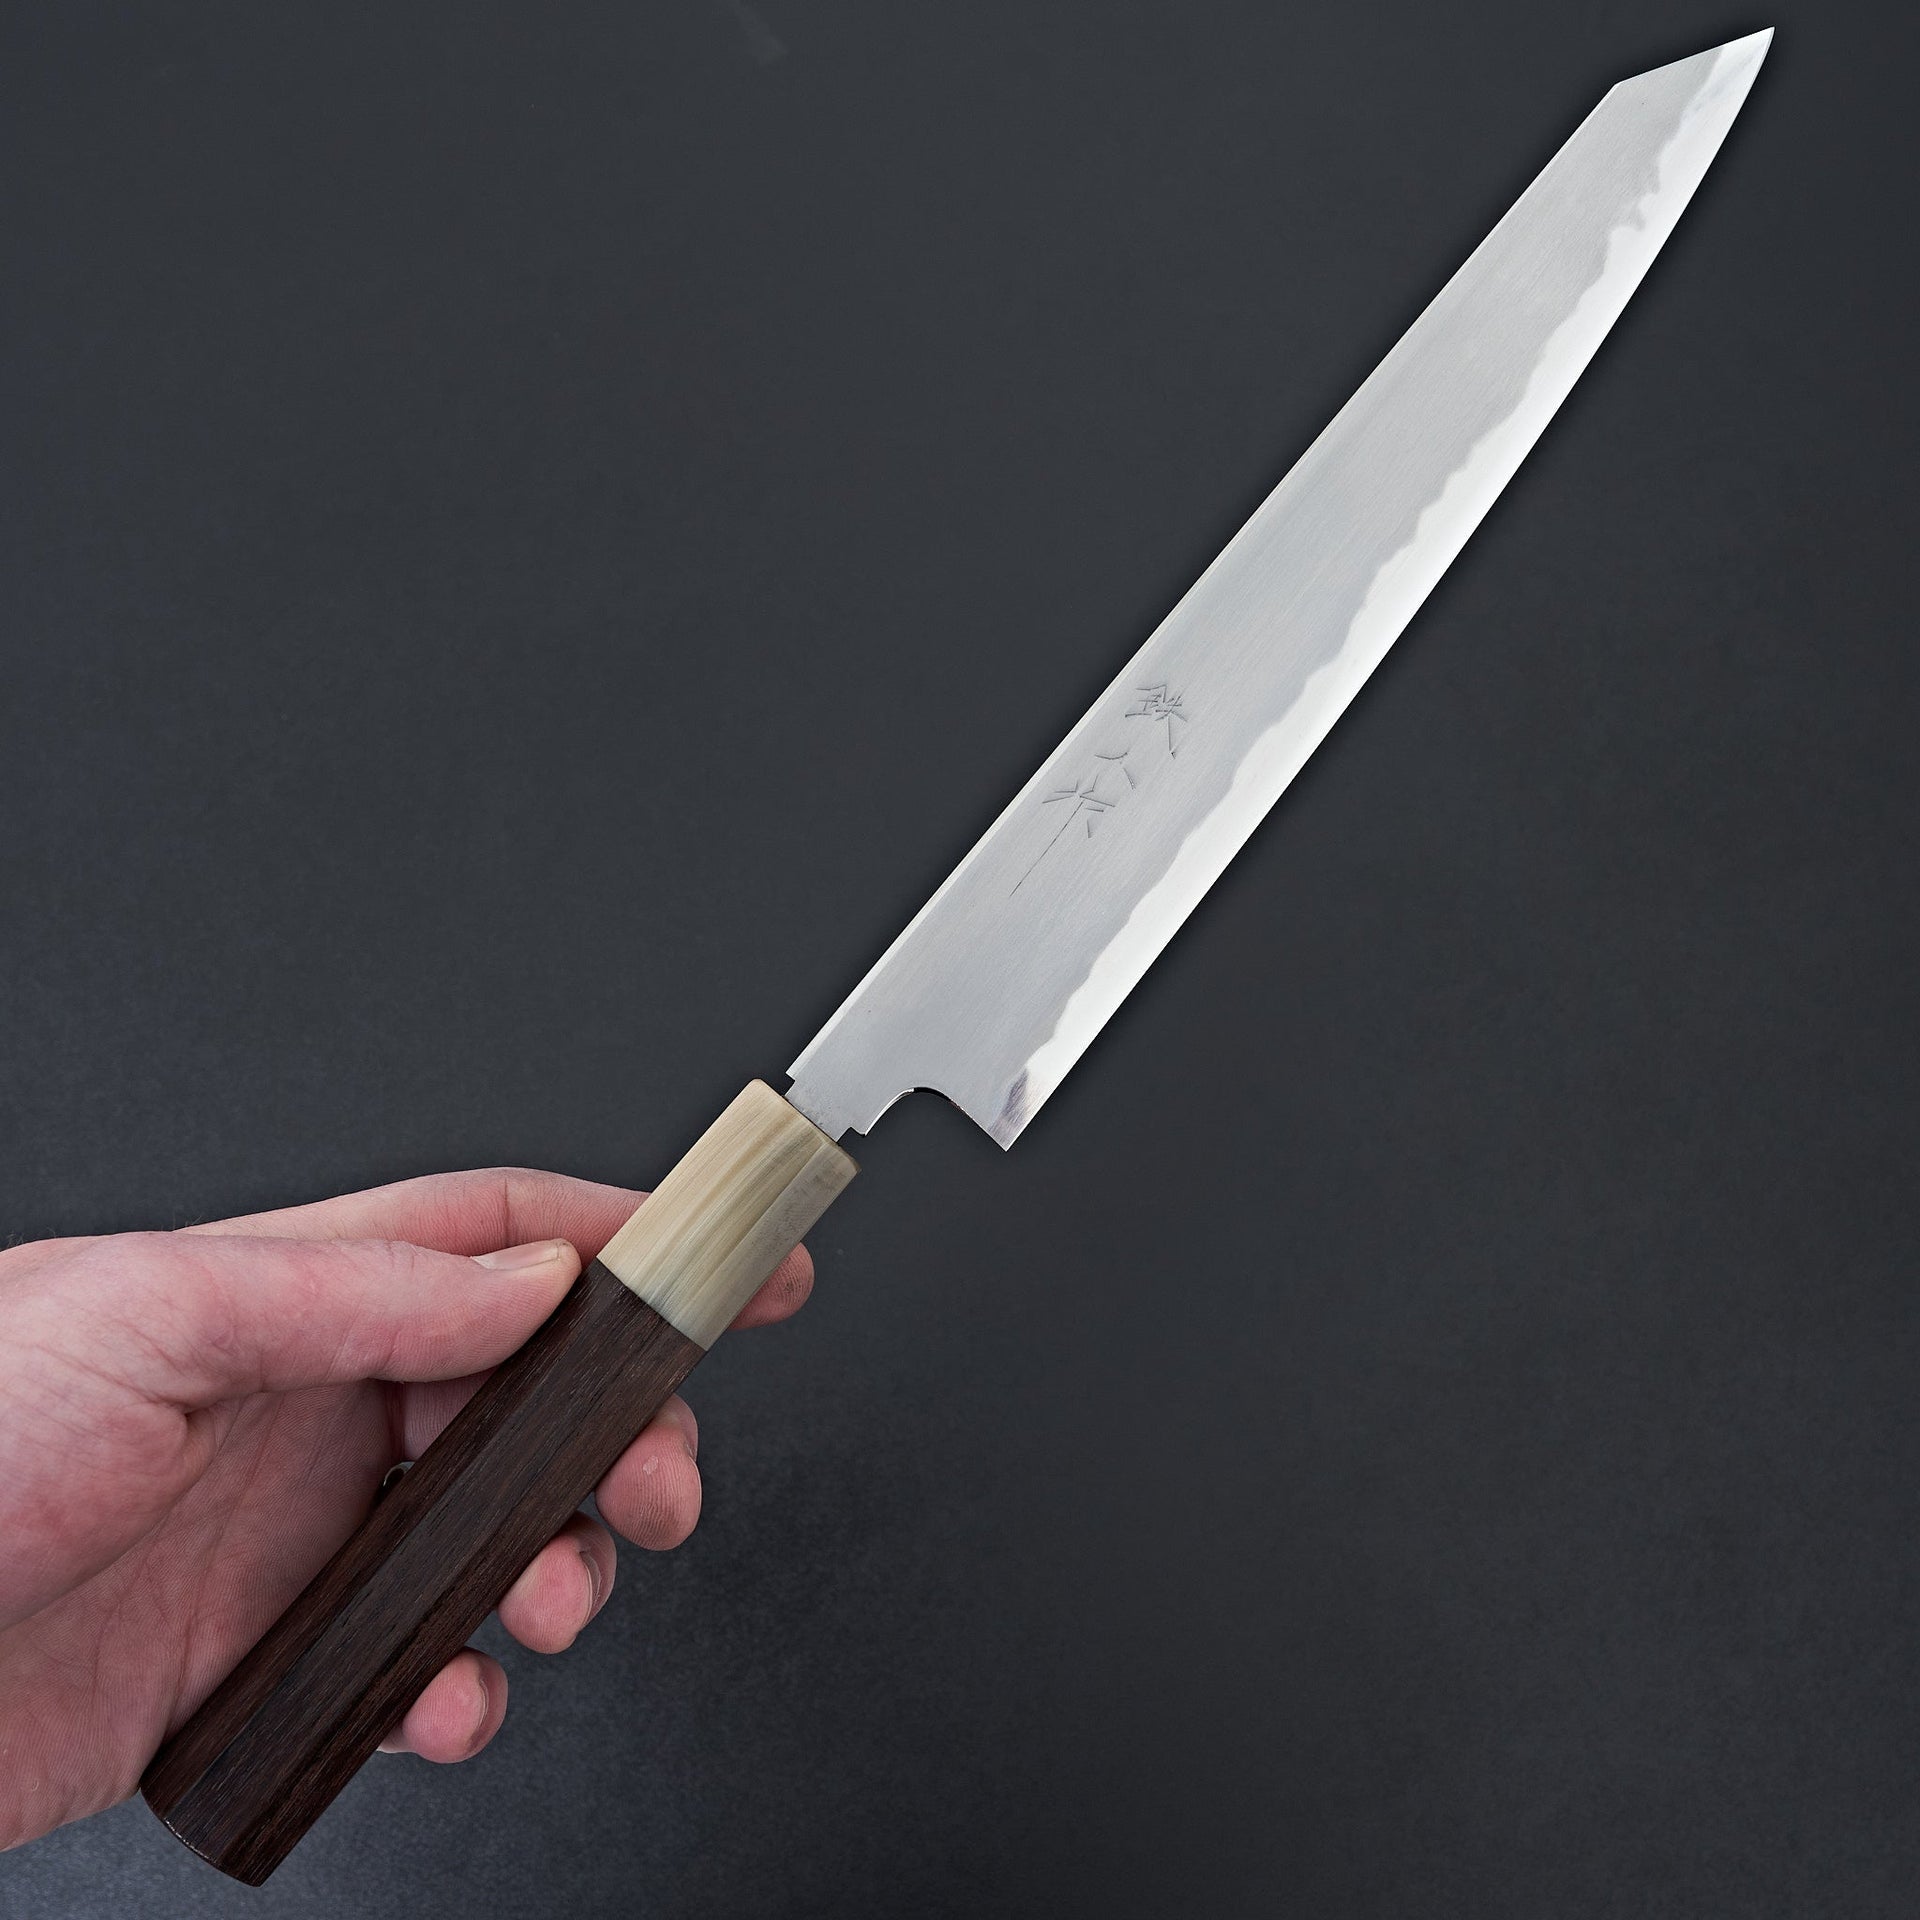 Tetsujin Blue #2 Kasumi Kiritsuke Sujihiki 240mm Taihei Wood Handle-Knife-Hitohira-Carbon Knife Co